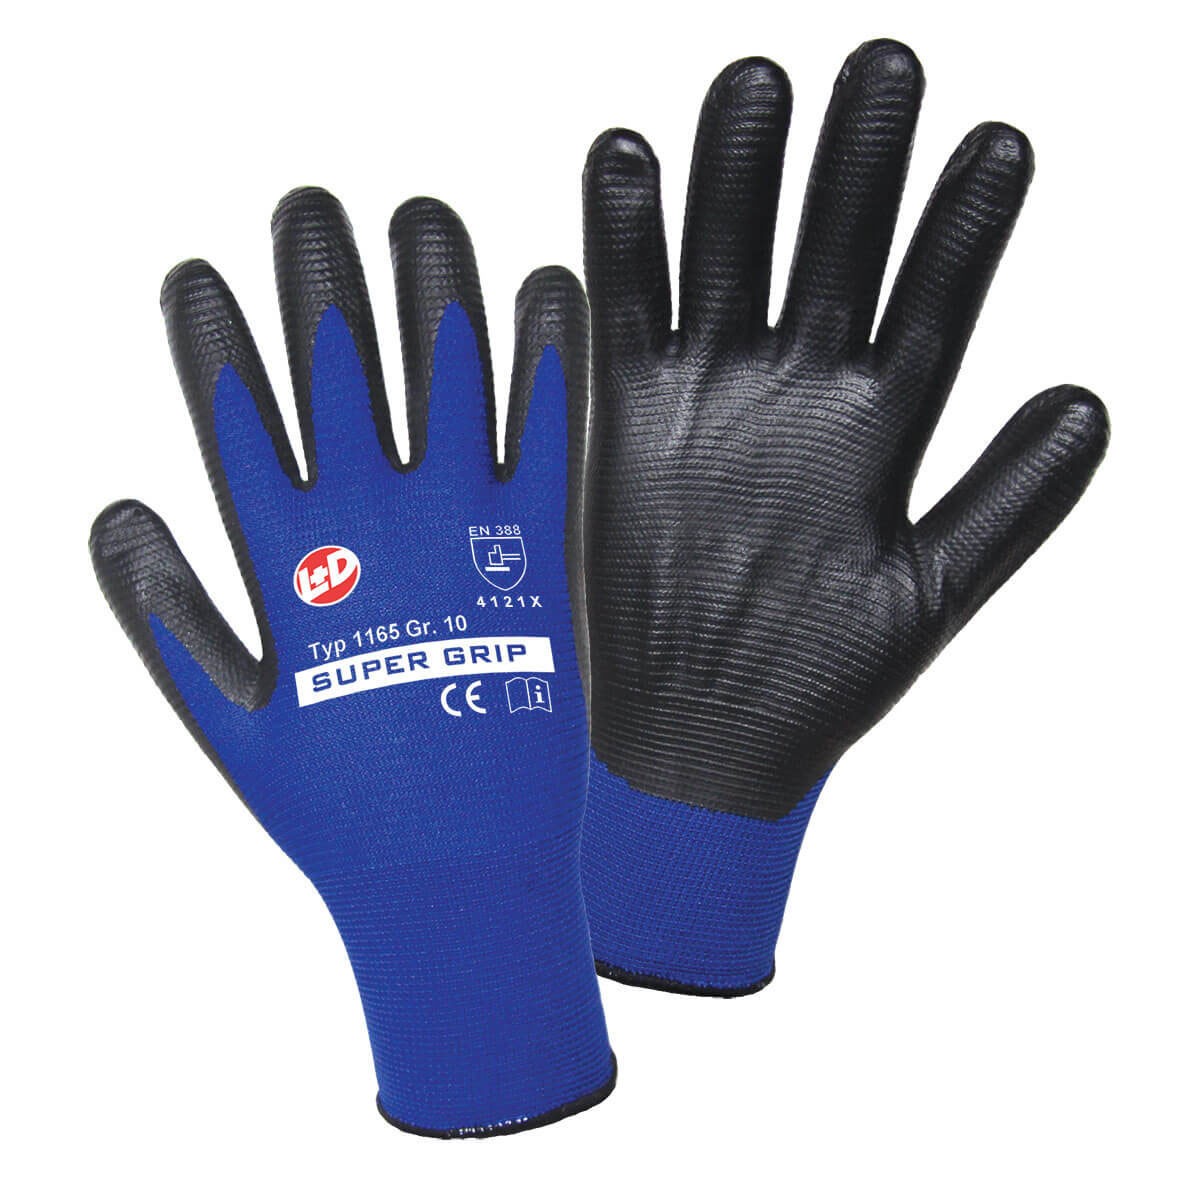 L+D SUPER GRIP blue, black, Nylon Protective gloves 1165-8 buy